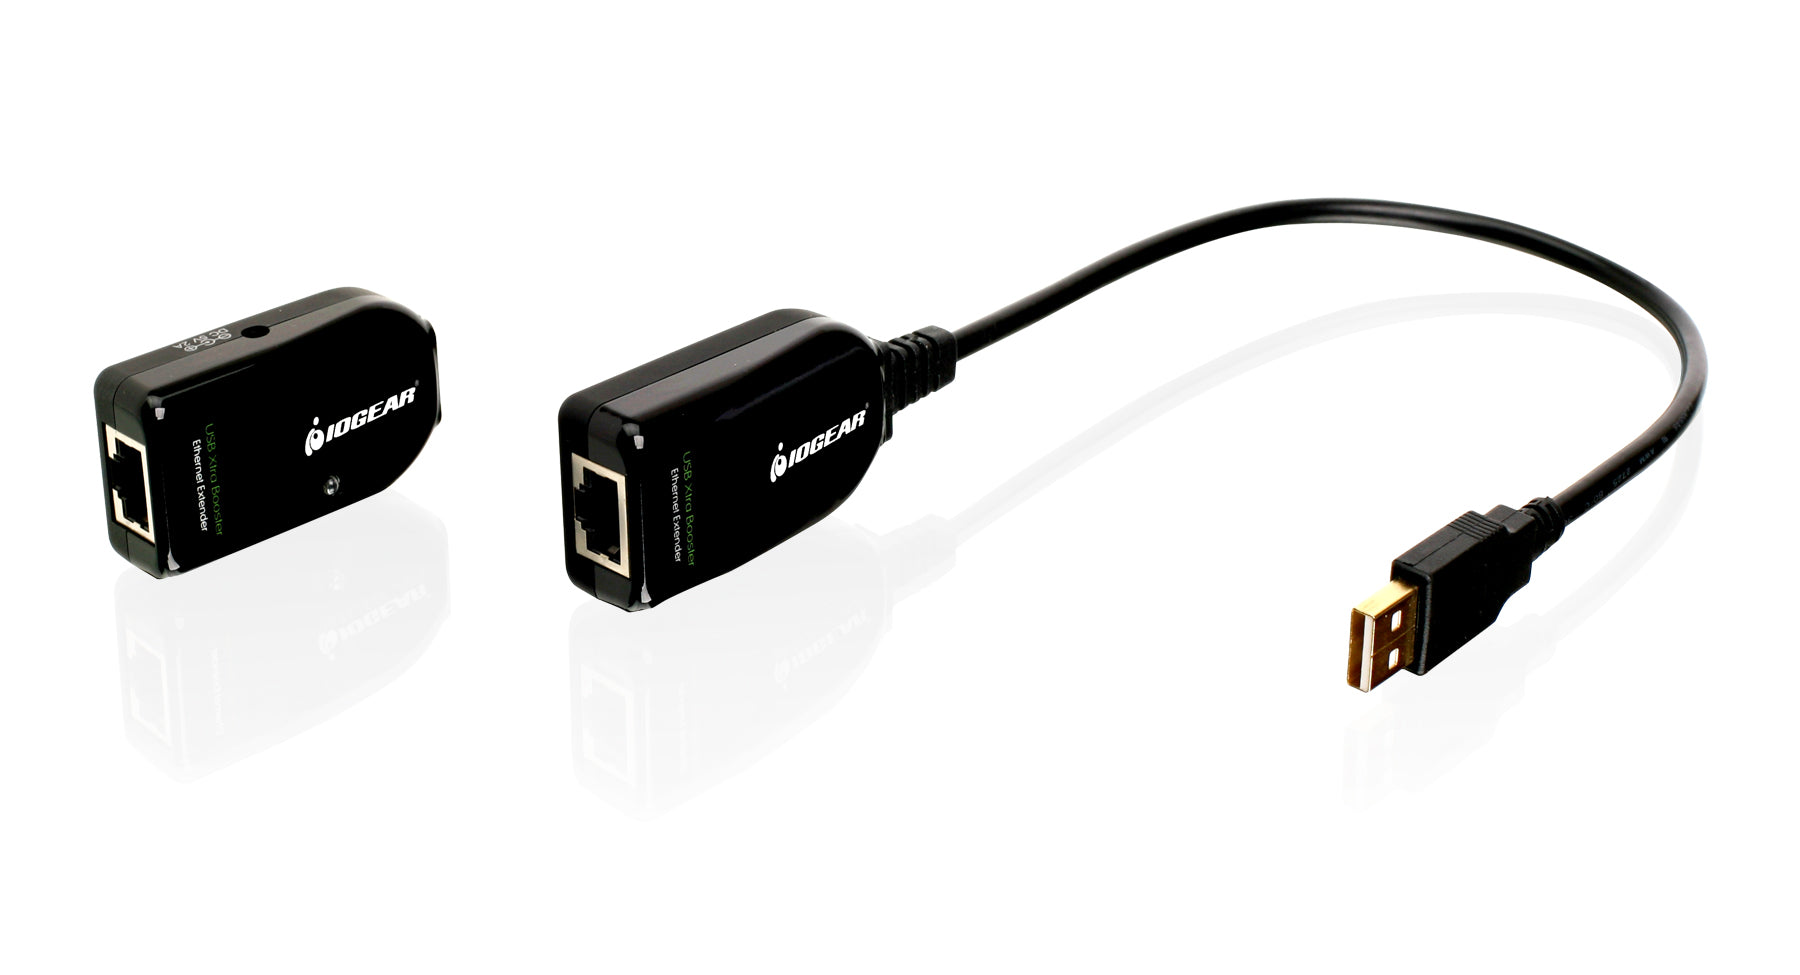 USB 2.0 BoostLinq Ethernet - 164ft (TAA Compliant)